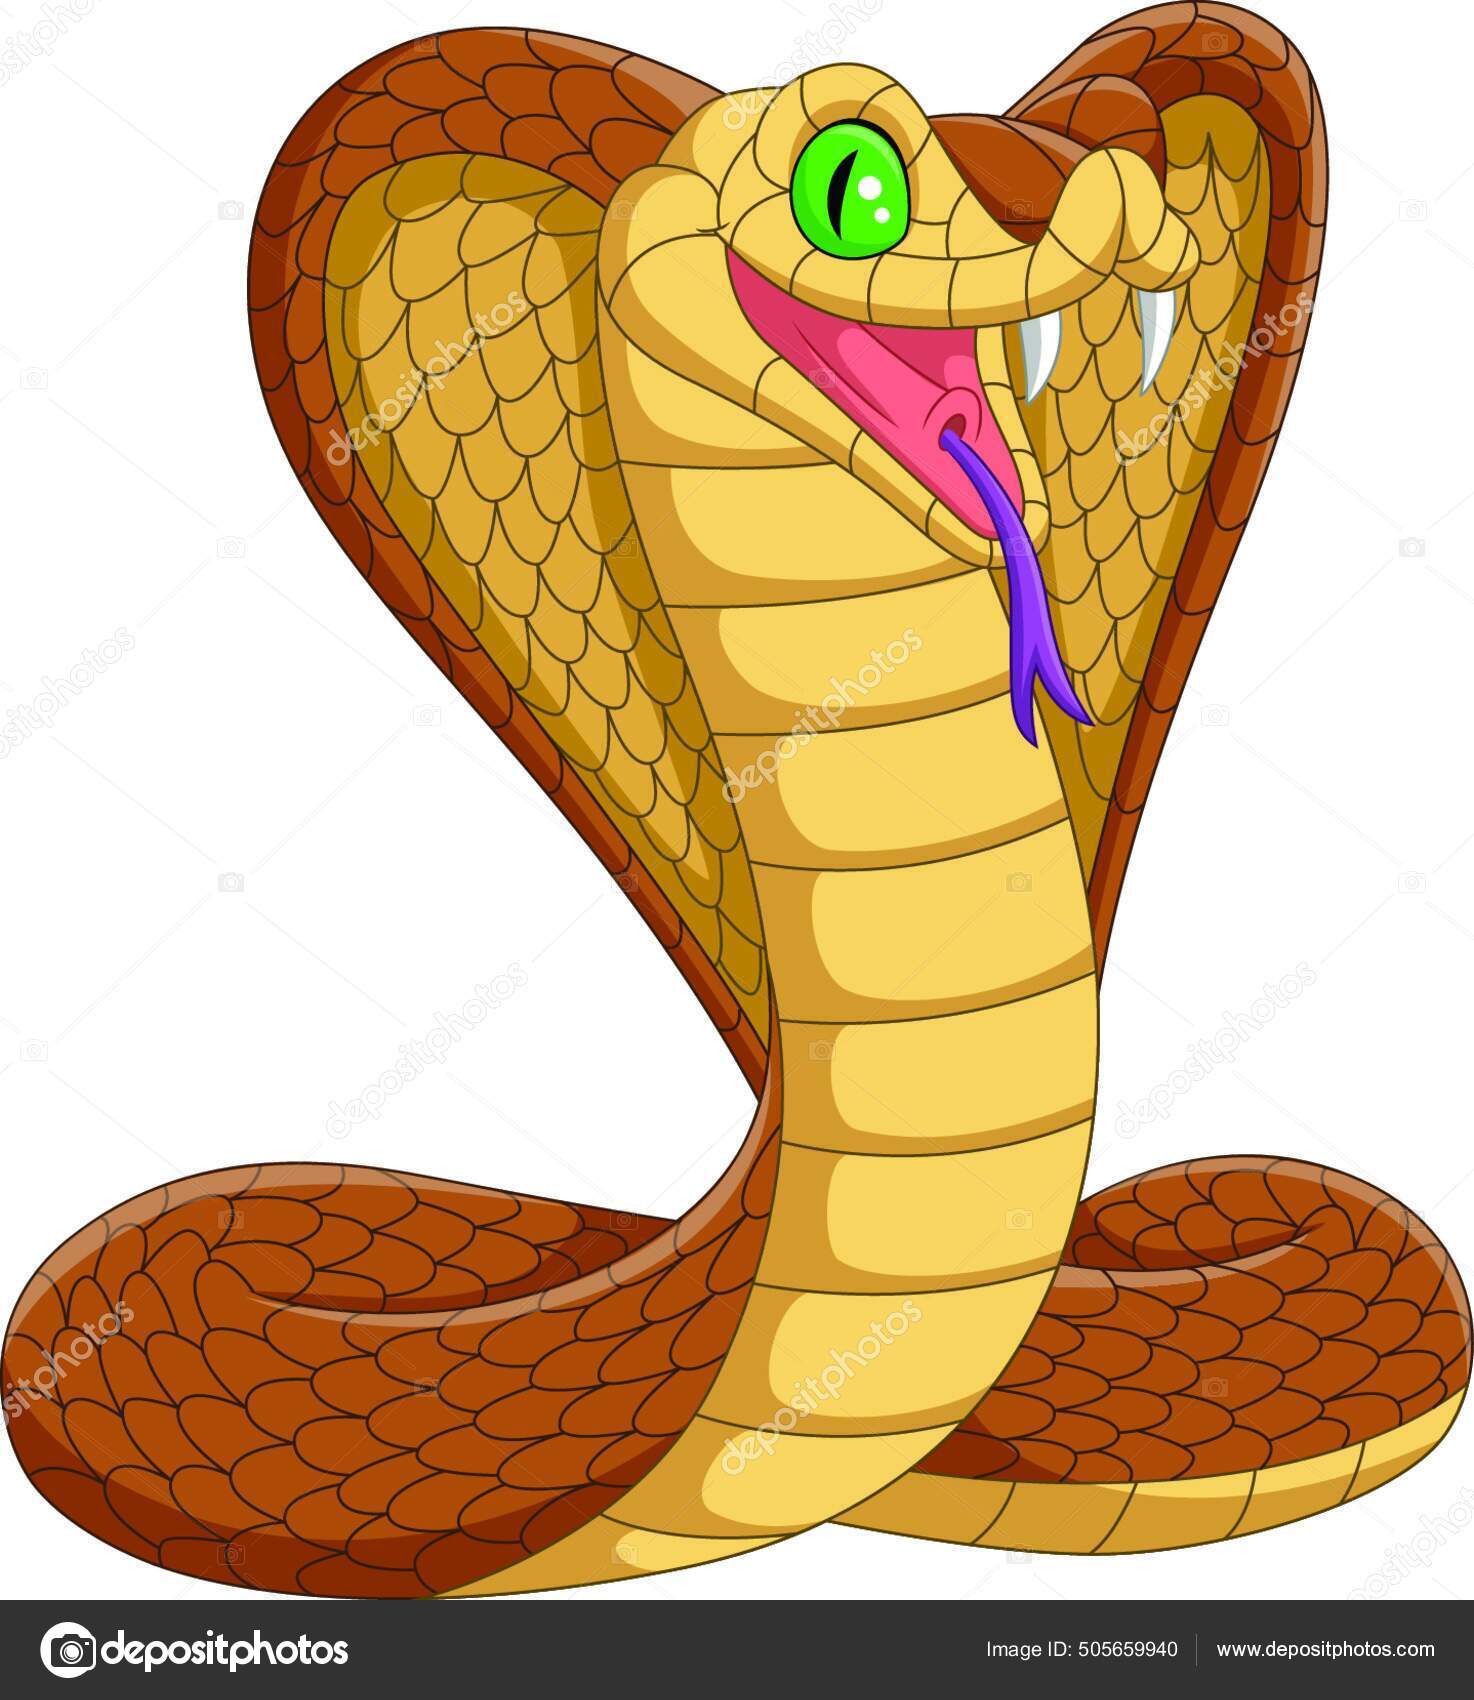 White snake cobra Royalty Free Vector Image - VectorStock